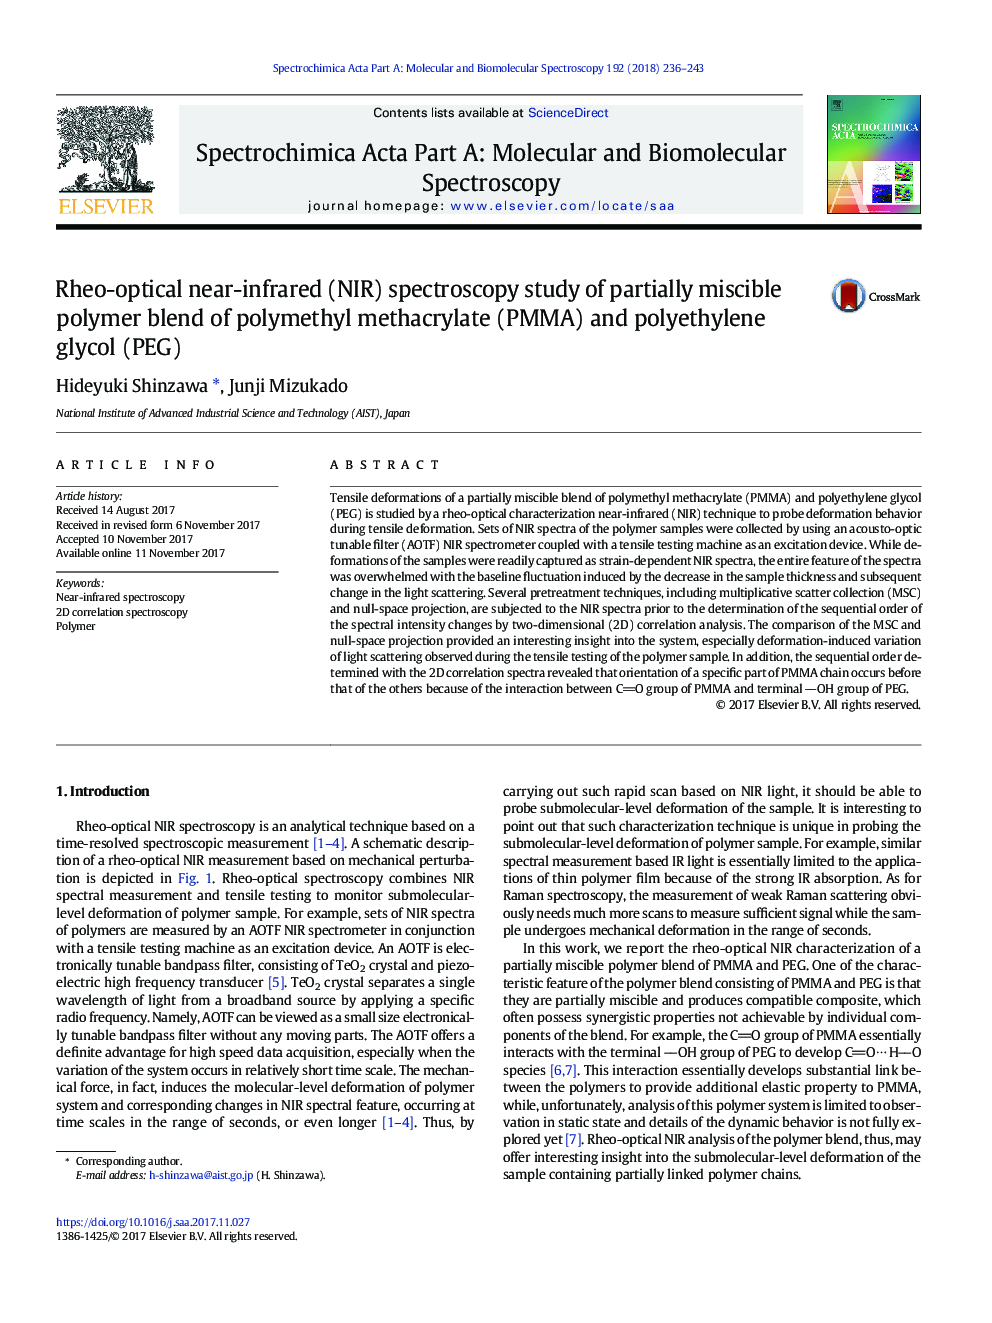 Rheo-optical near-infrared (NIR) spectroscopy study of partially miscible polymer blend of polymethyl methacrylate (PMMA) and polyethylene glycol (PEG)